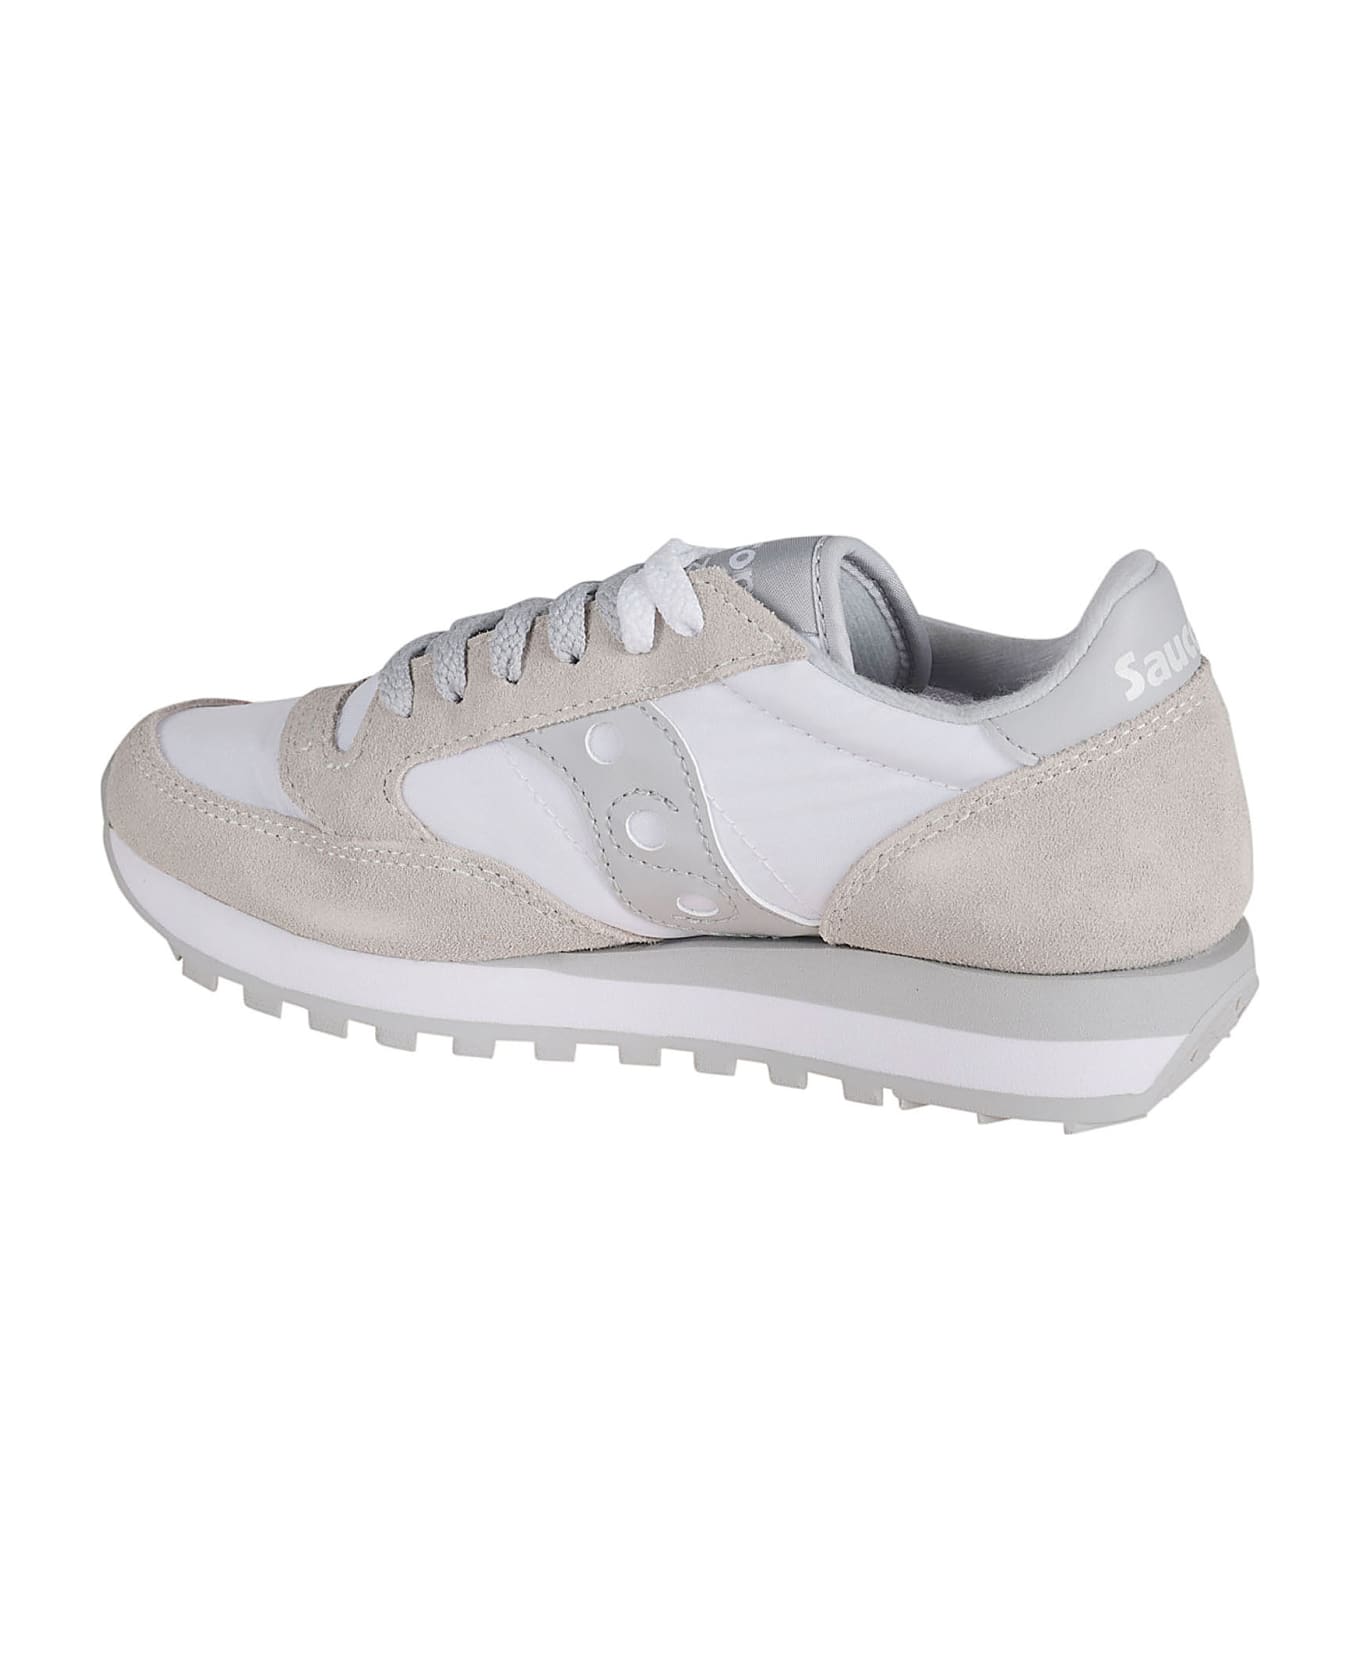 Saucony Shadow Original Sneakers - White/Grey